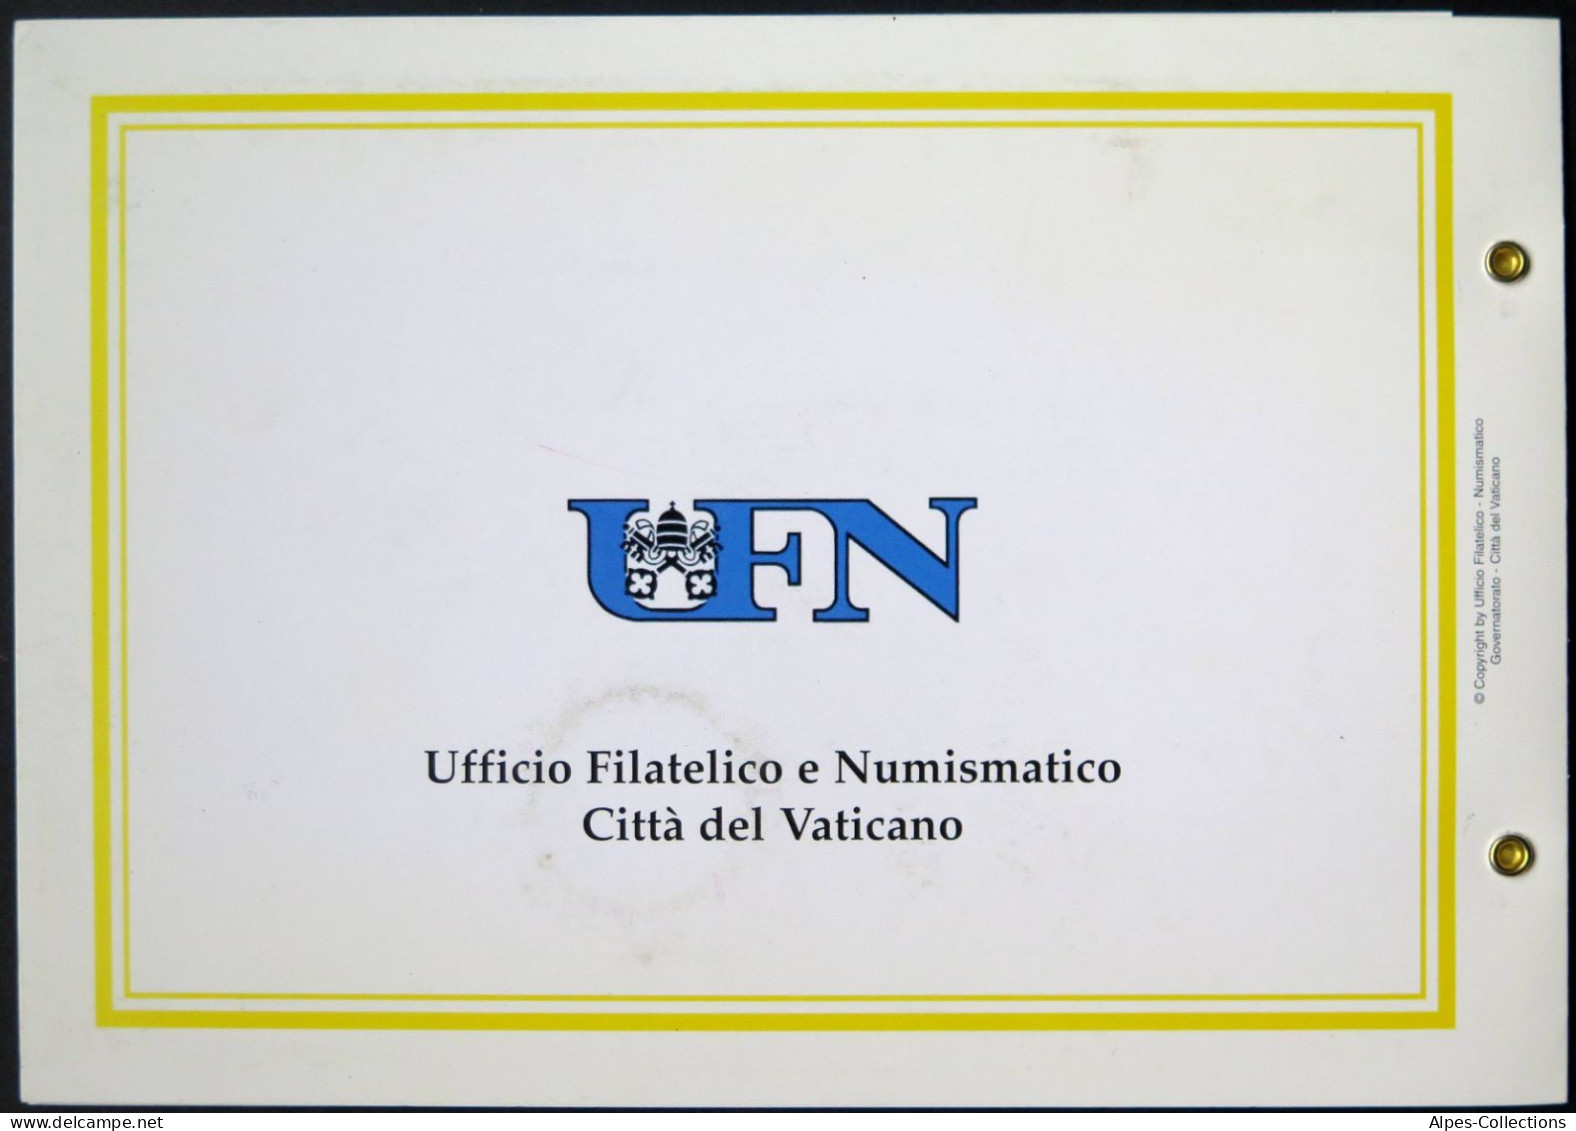 VA20009.2 - NUMISCOVER VATICAN - 2009 - 2 € Comm Année Internationale Astronomie - Vatican